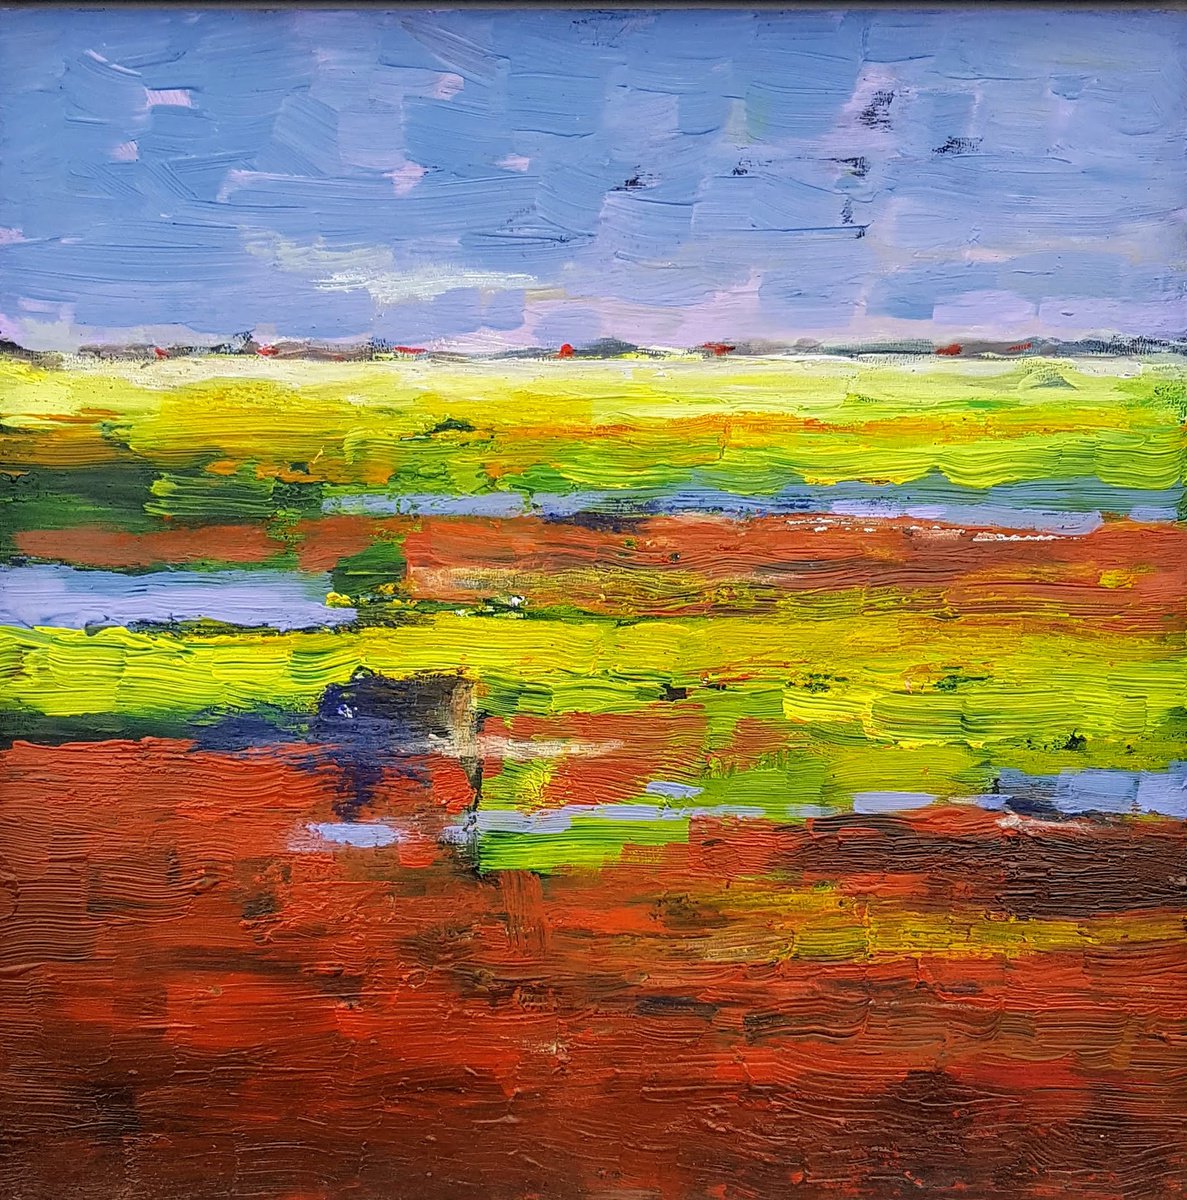 Positive abstract summer color landscape by Wim van de Wege